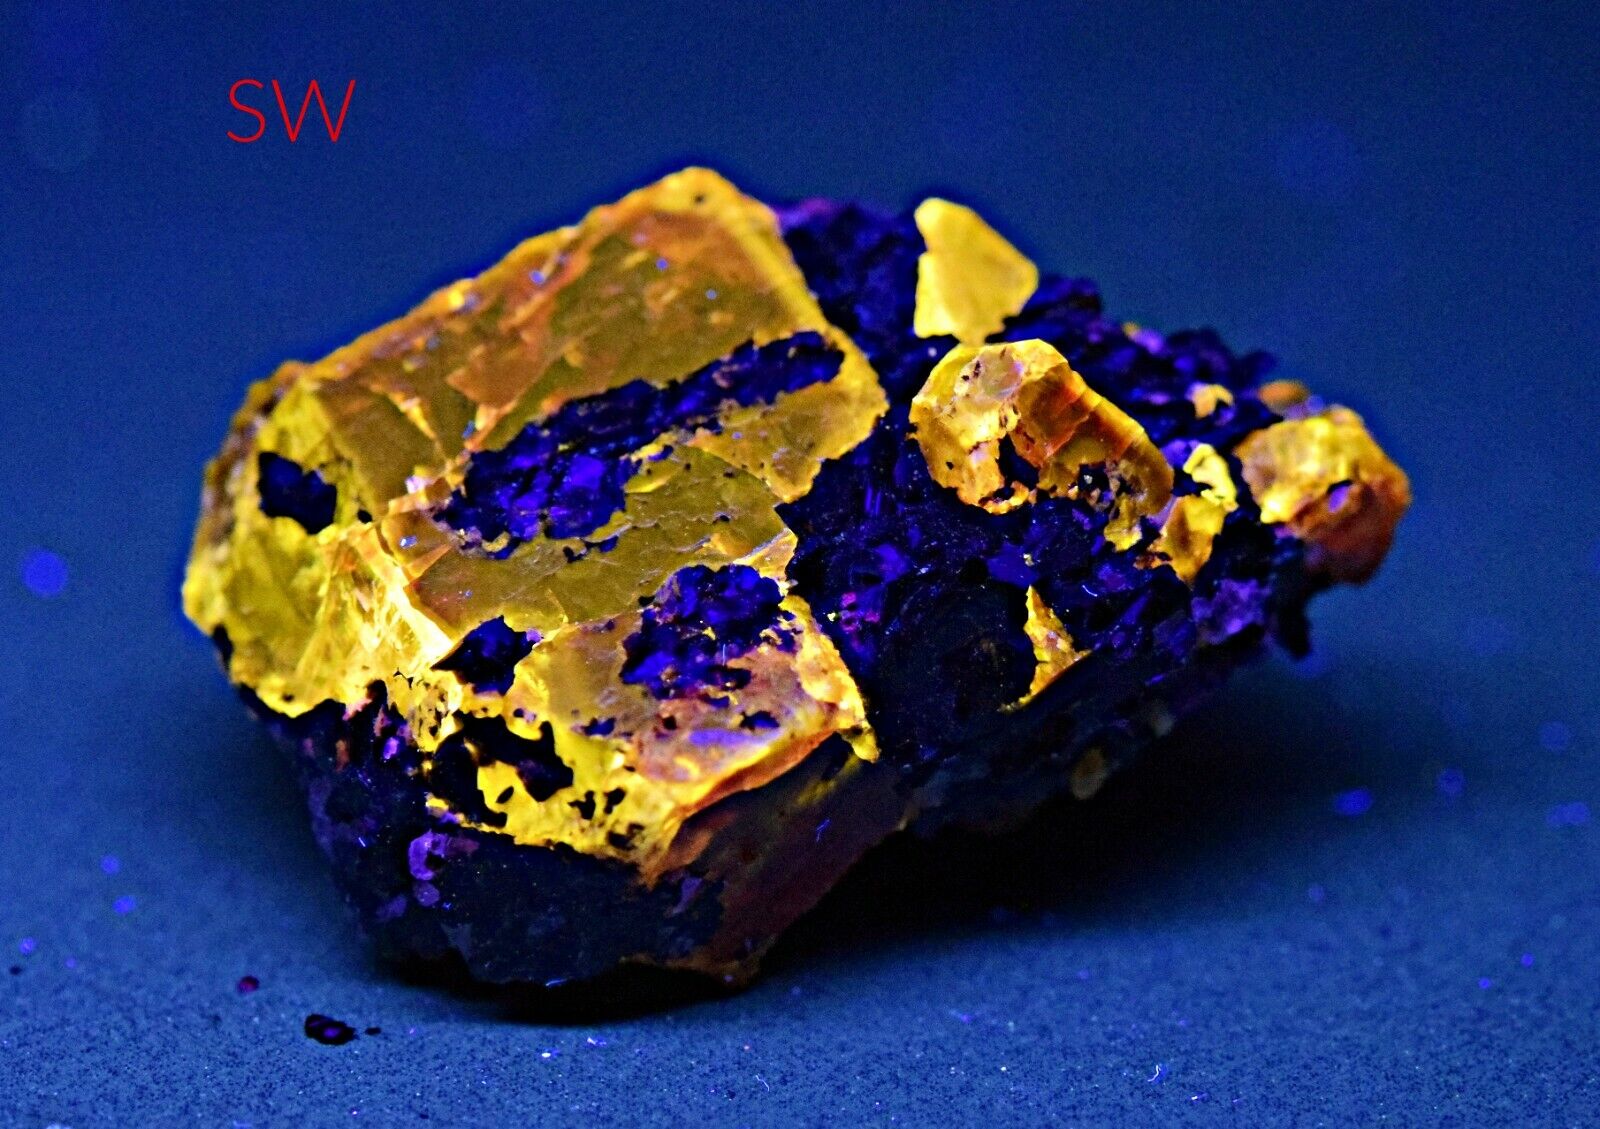 31 Carat SW UV Light Fluorescent Terminated Zircon Crystal From Pakistan